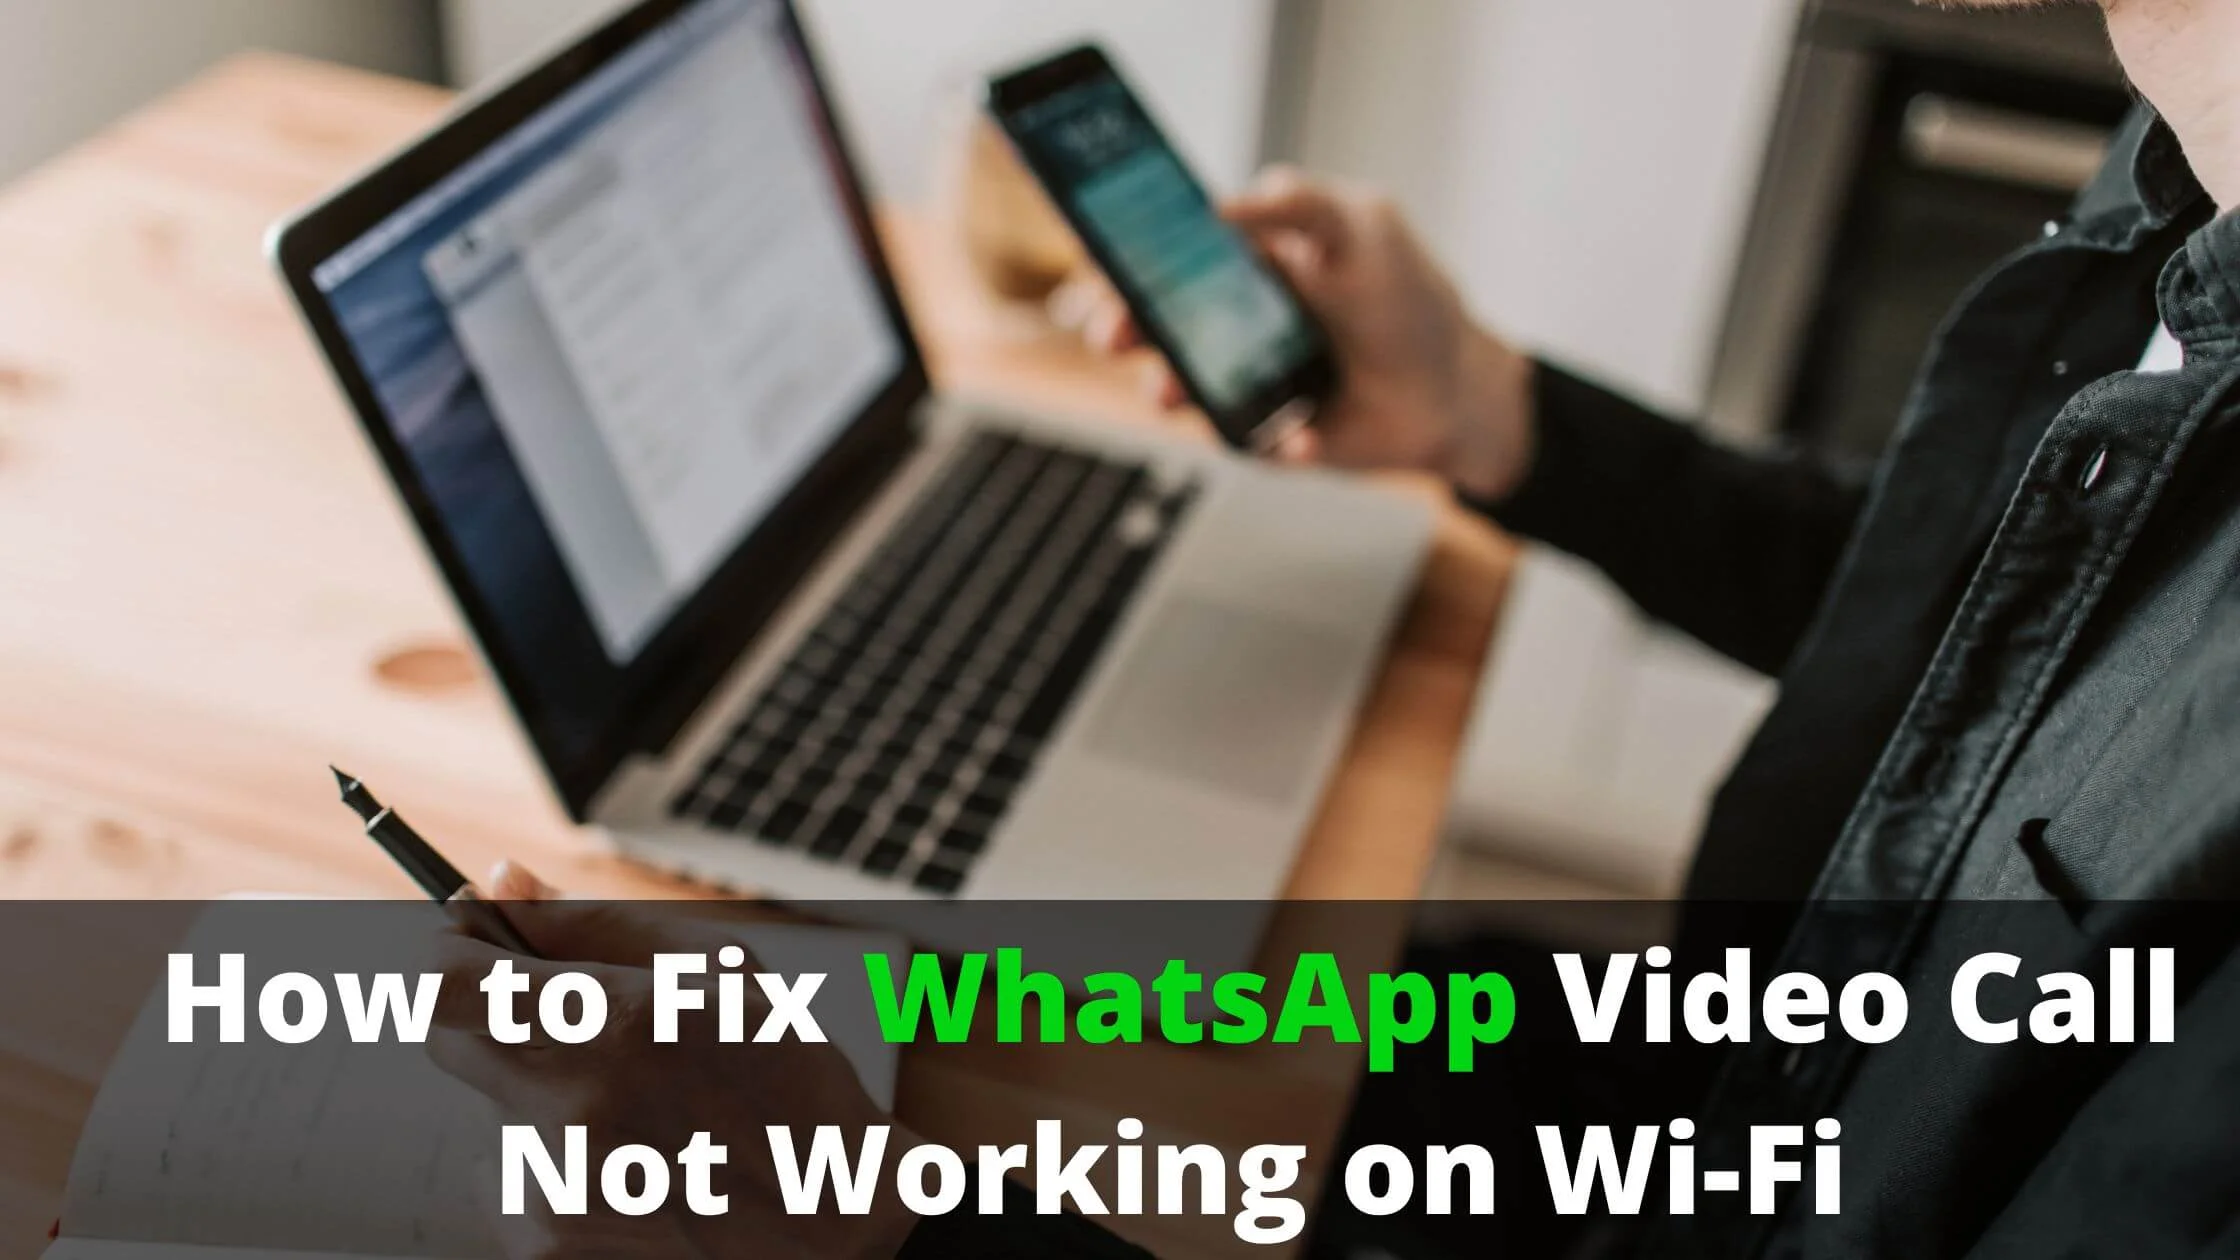 WhatsApp video call not working on Wi-Fi